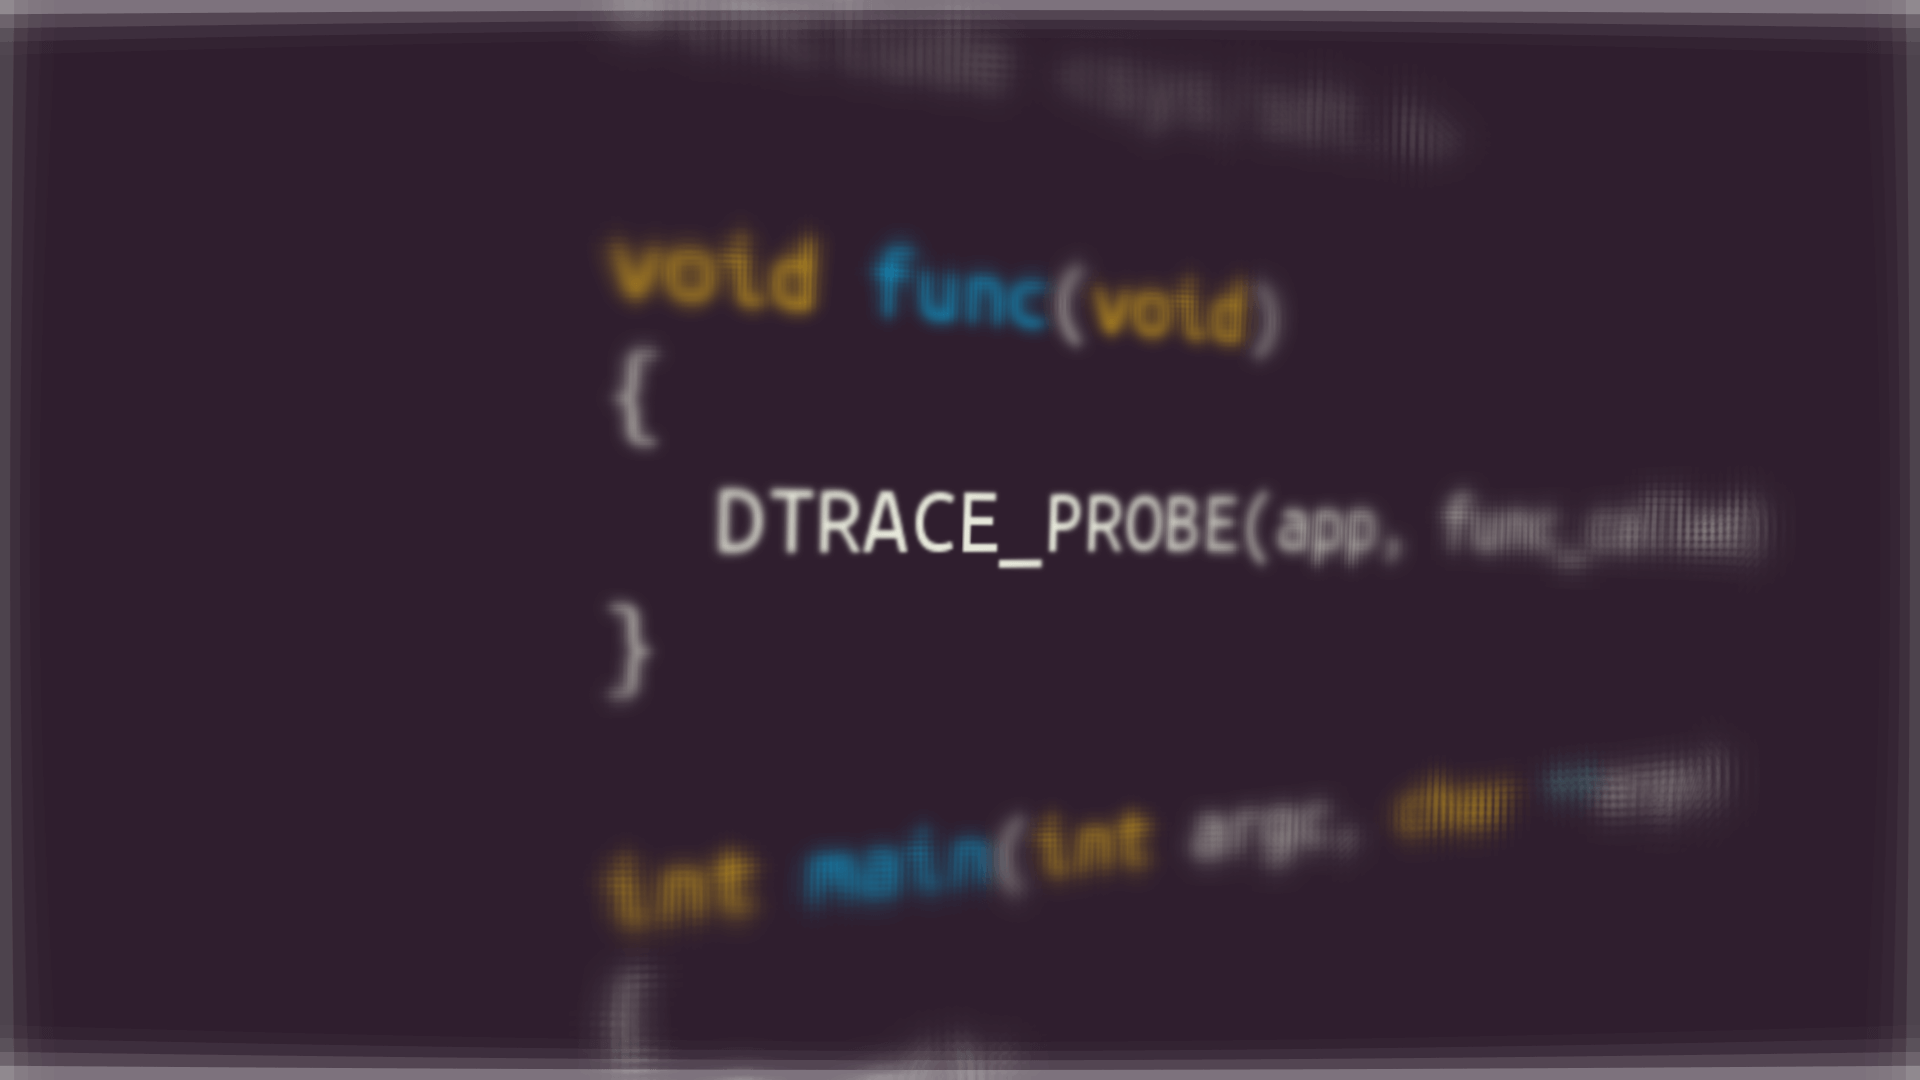 DTRACE_PROBE code